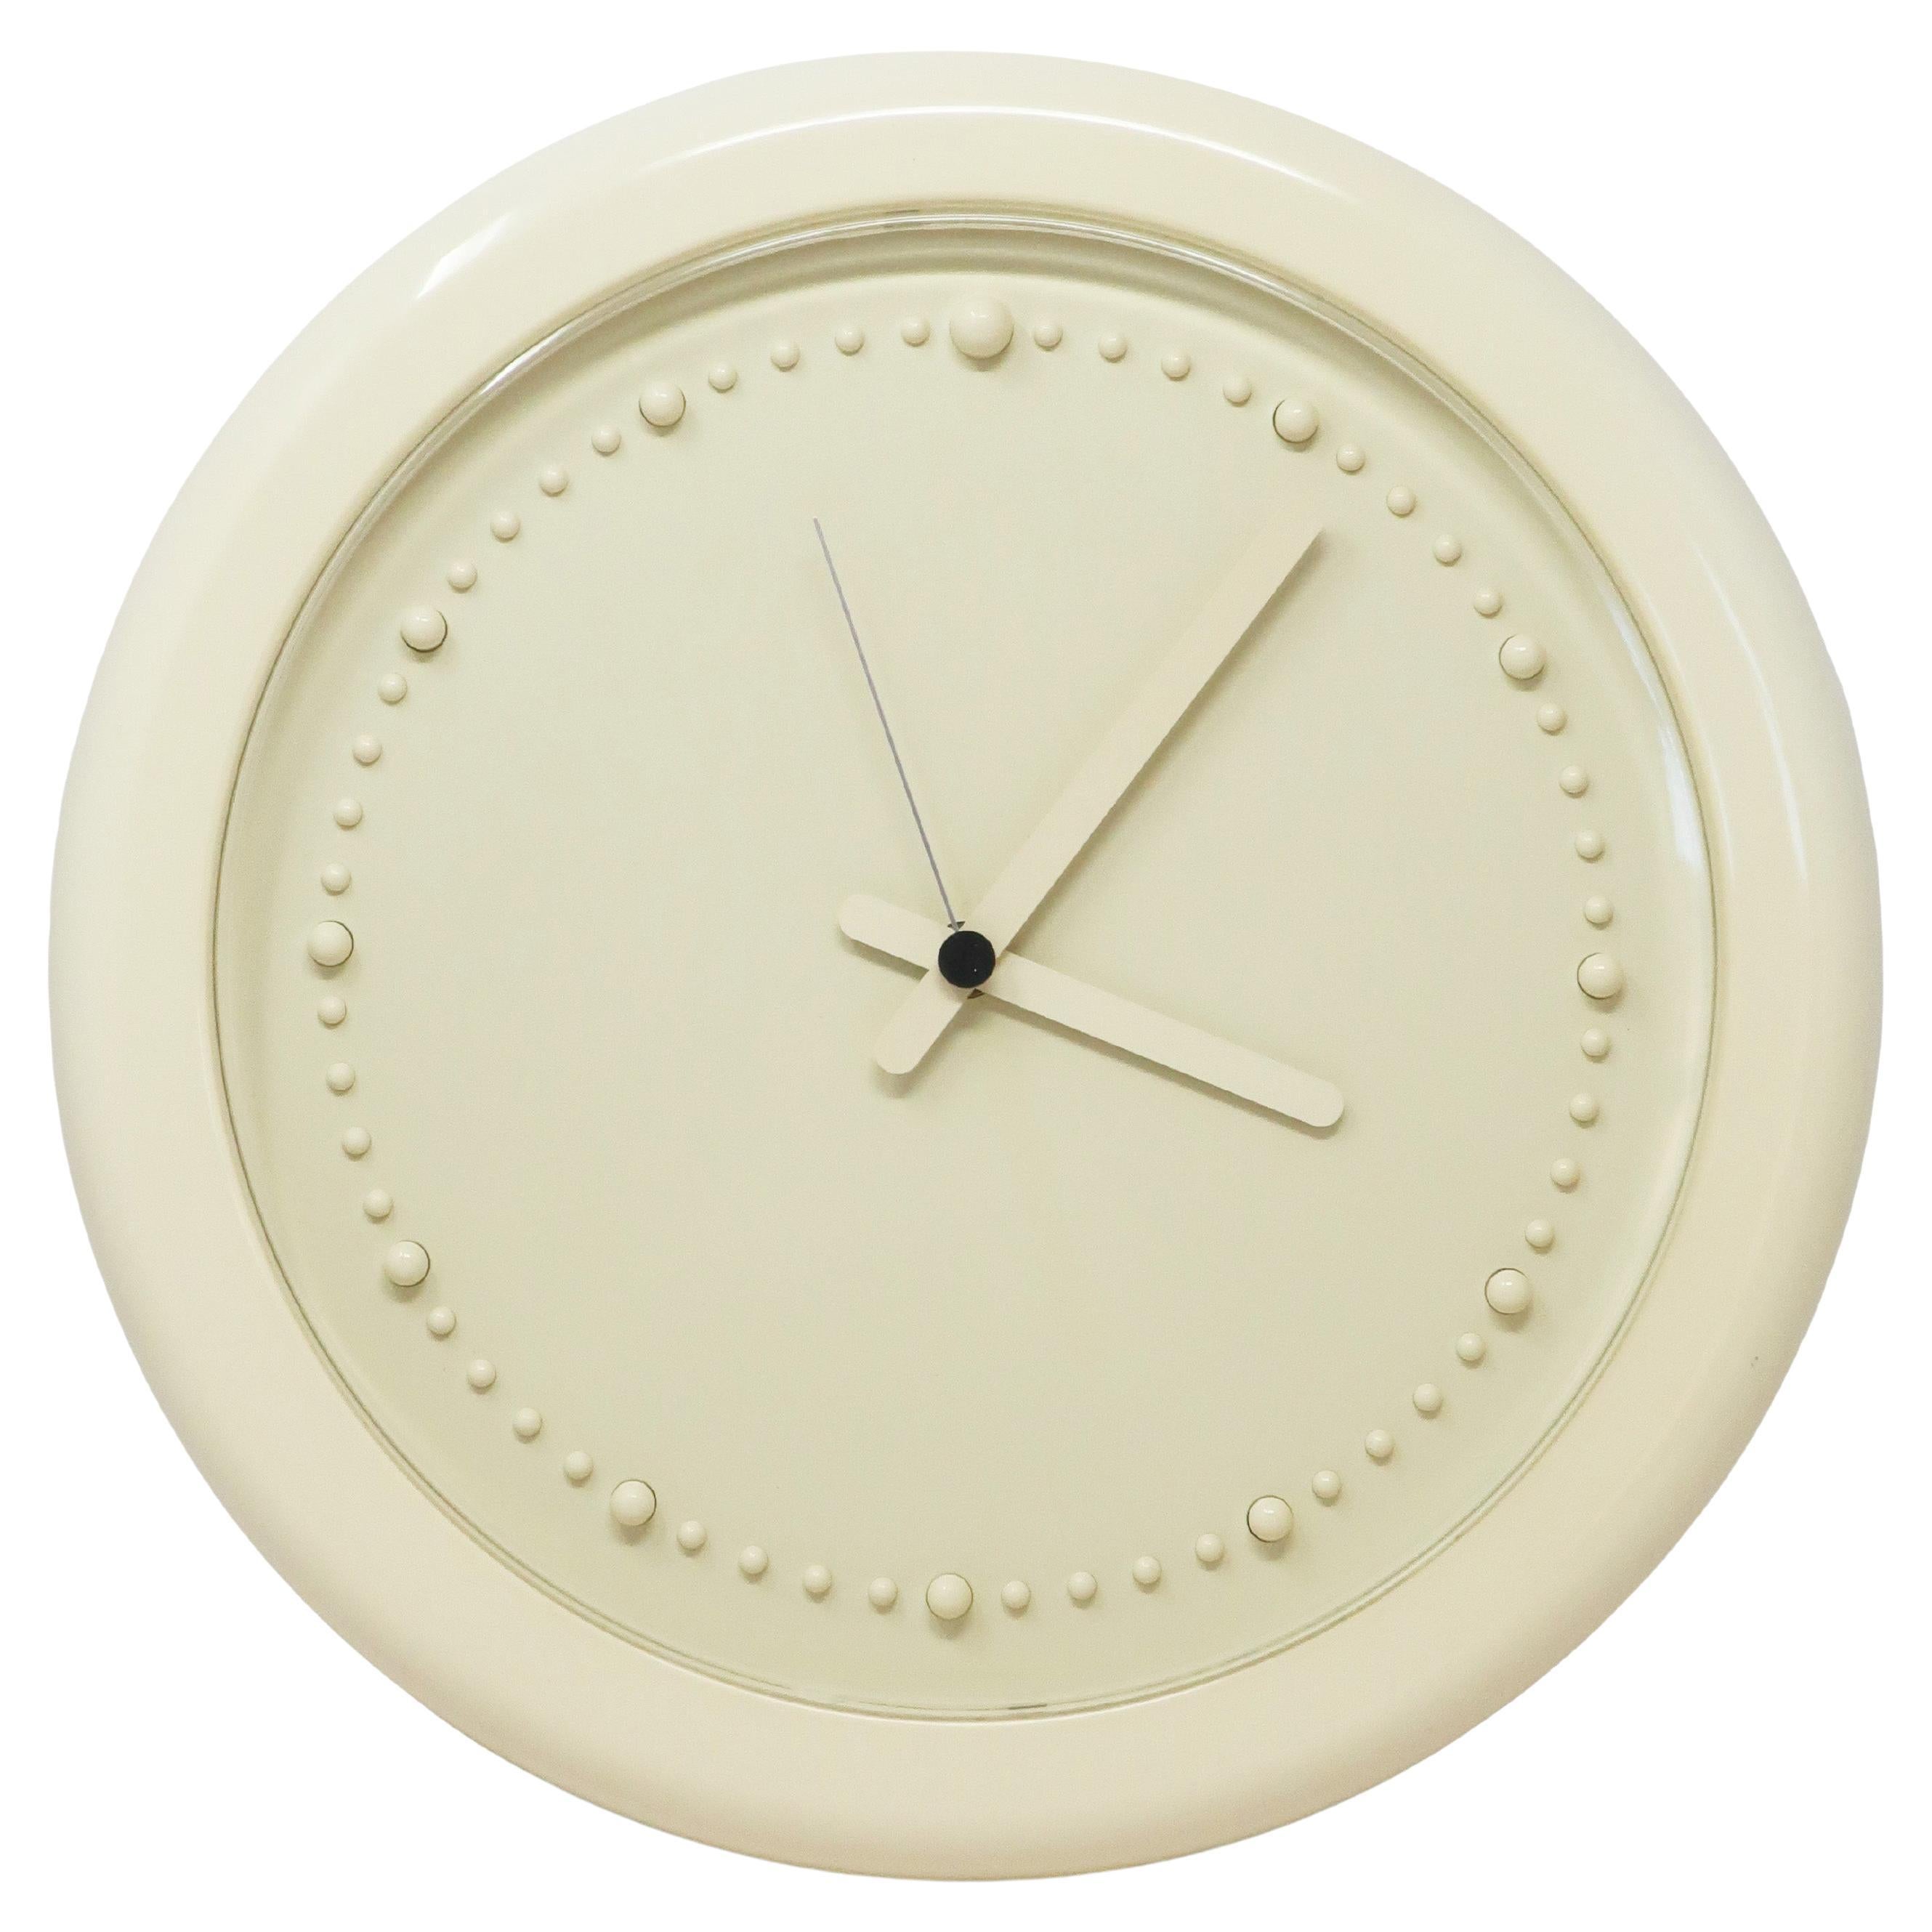 1980s Postmodern White Rexite Zero 980 Wall Clock For Sale